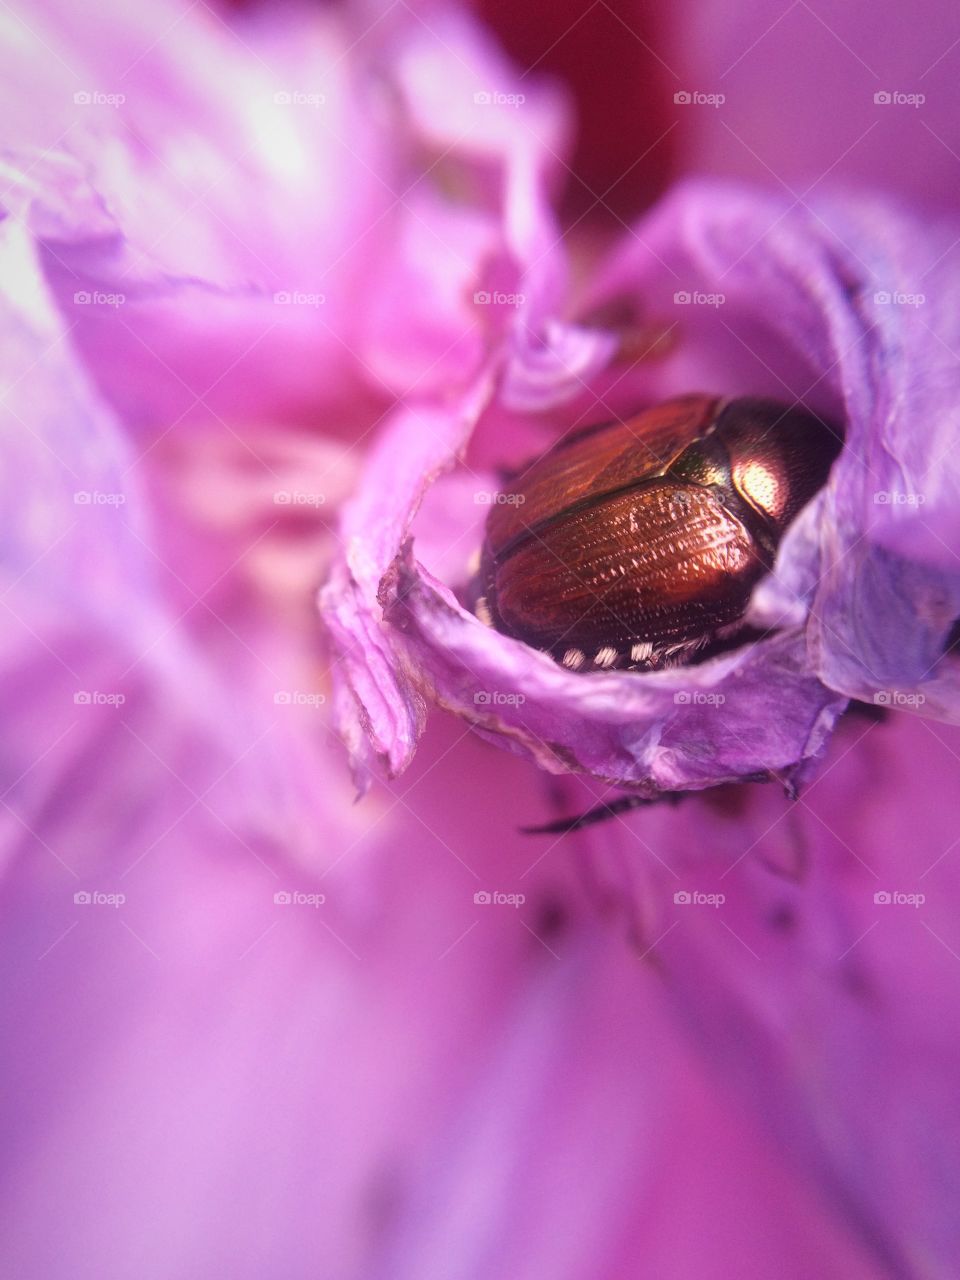 Snug as a bug . Little beetle snuggled down in flower petals.  